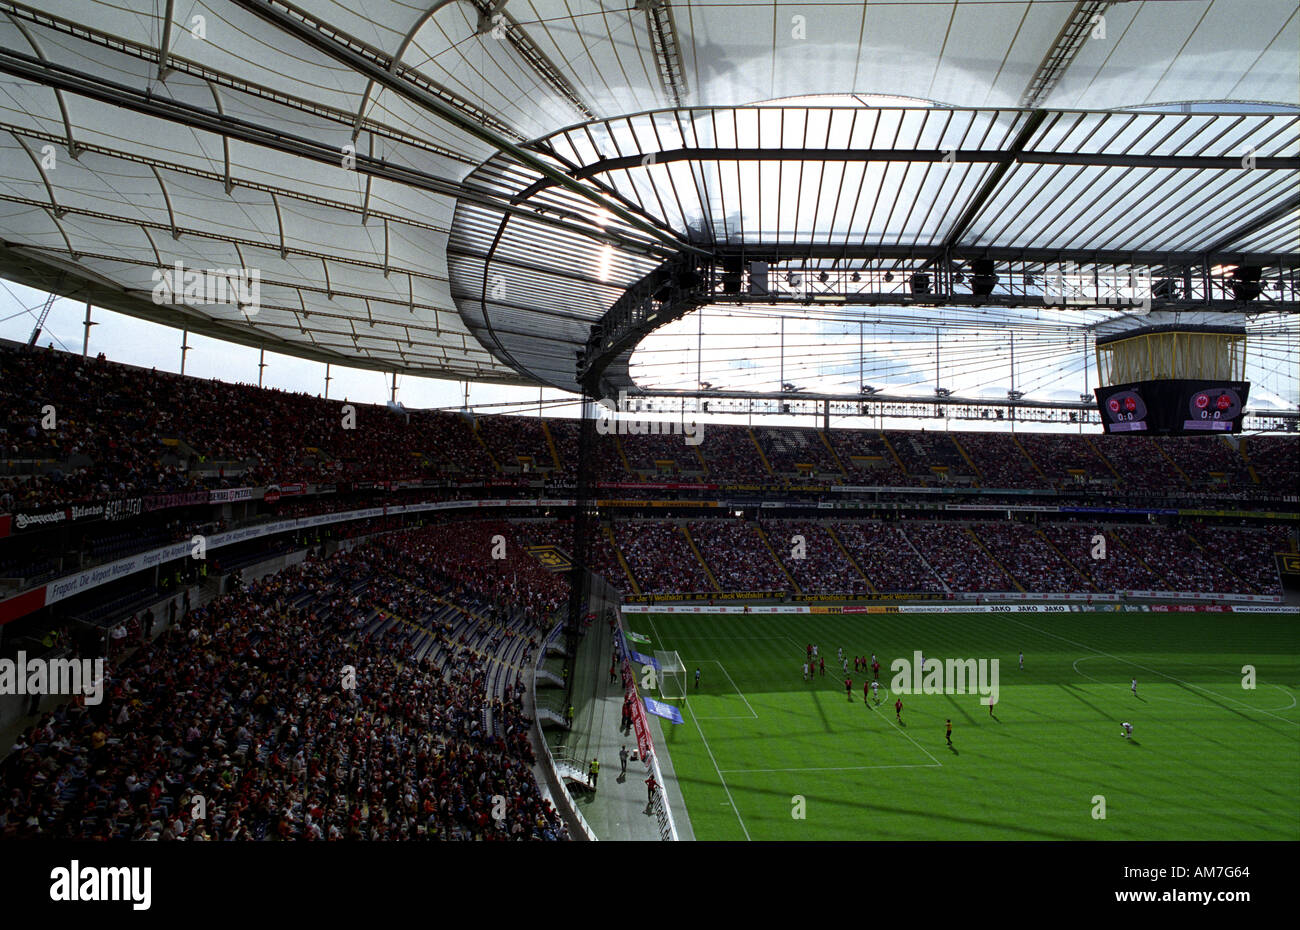 Commerzbank Arena, home of Eintracht Frankfurt football club, Germany. Stock Photo